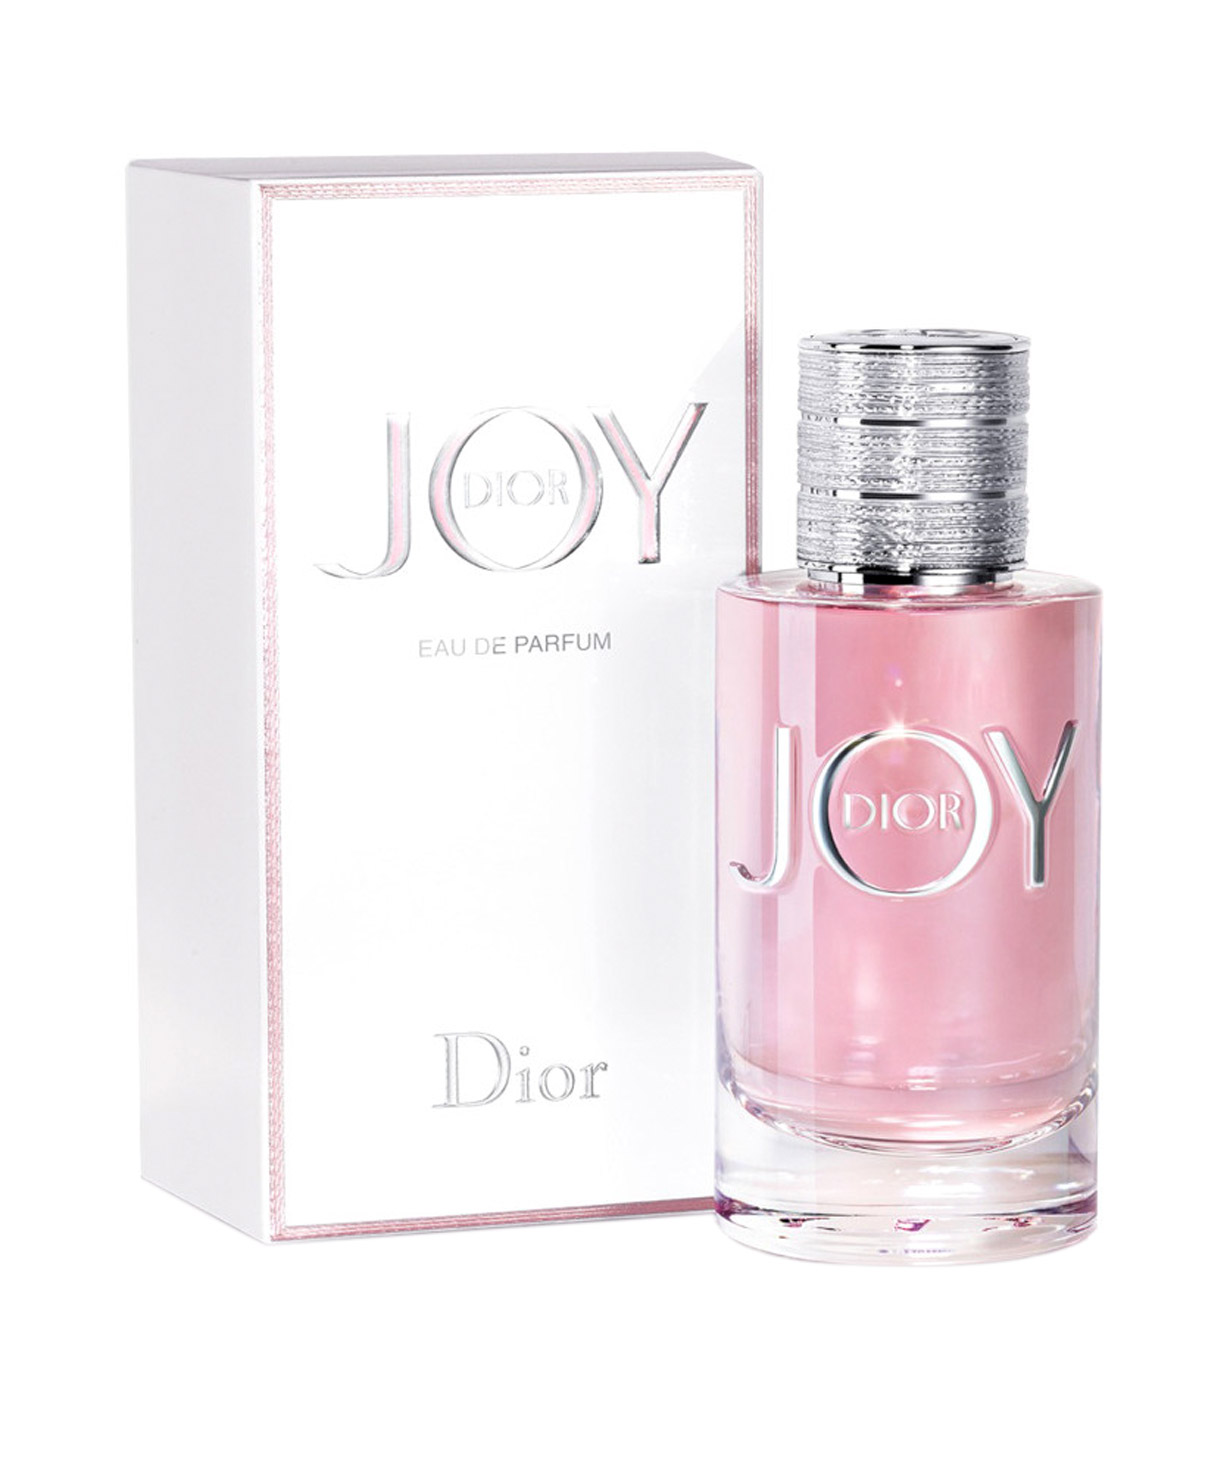 Օծանելիք «Dior joy» eau de parfum կանացի